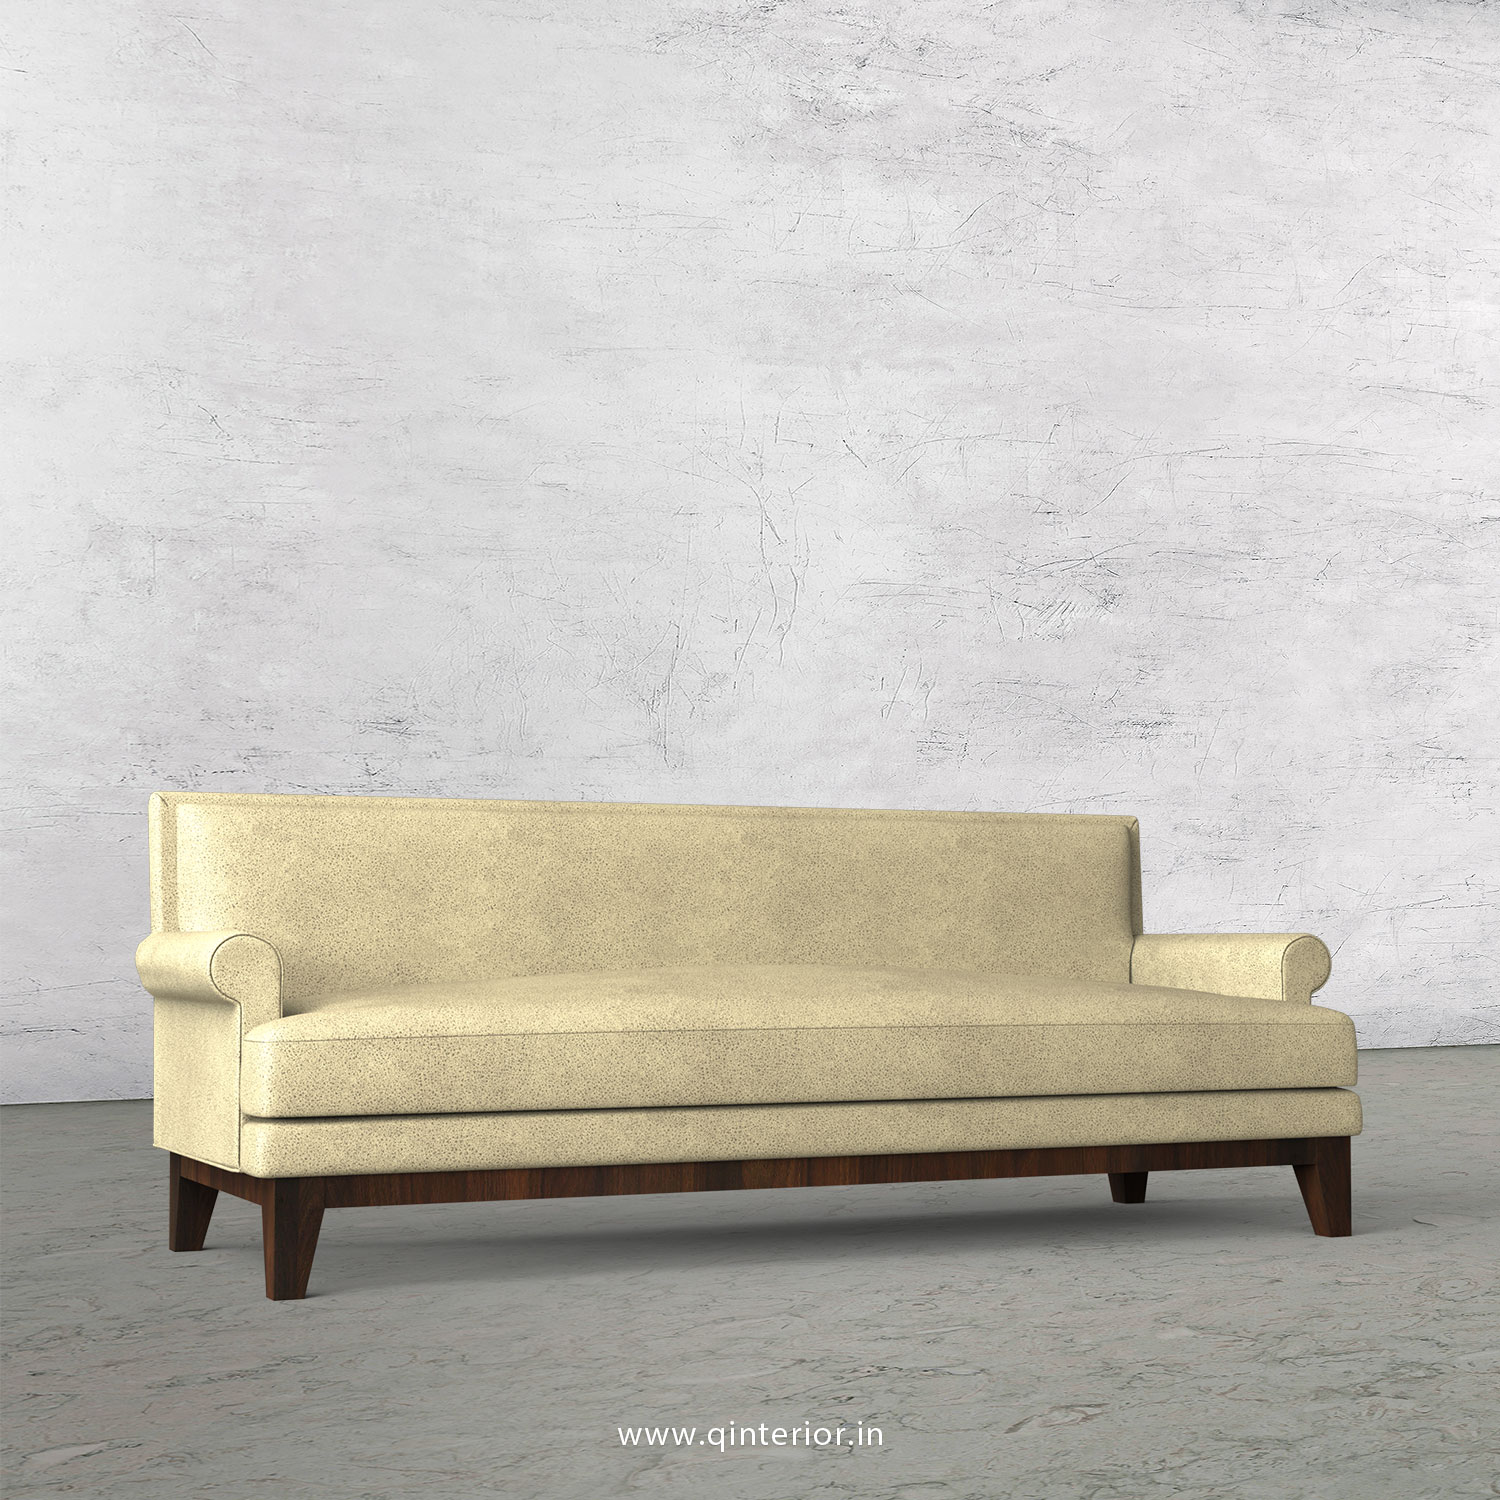 Aviana 3 Seater Sofa in Fab Leather Fabric - SFA001 FL10